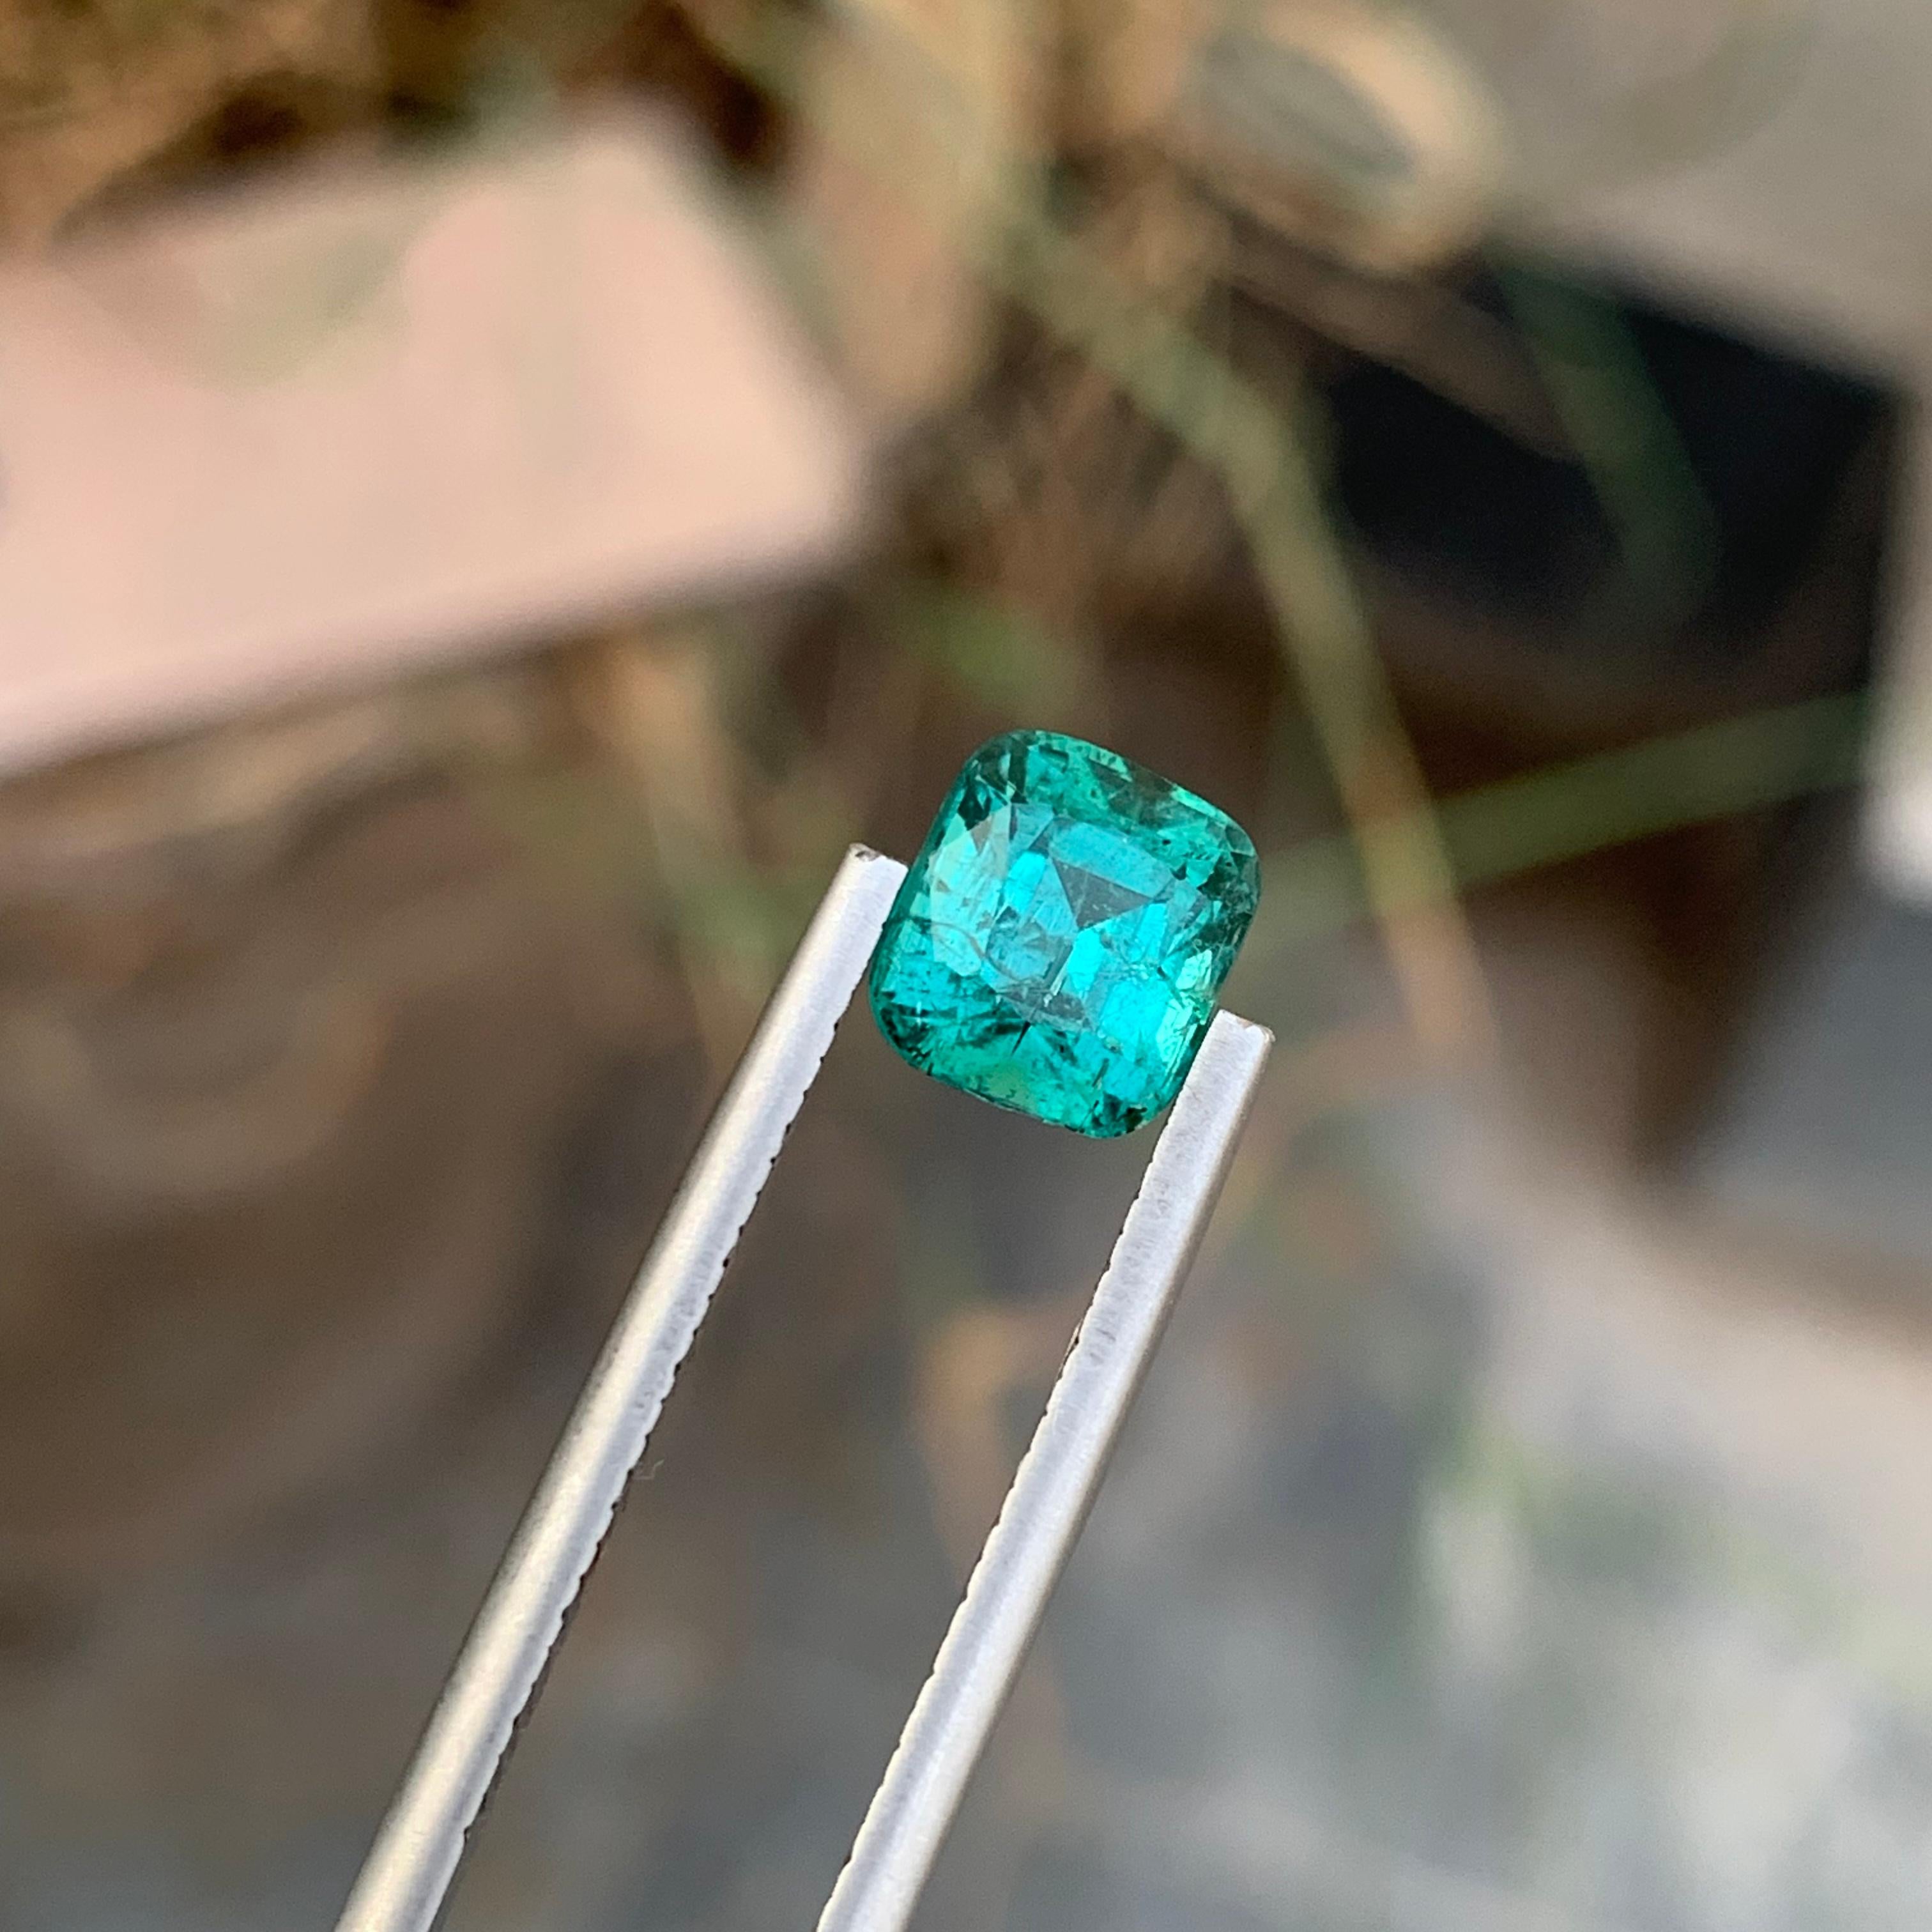 2.15 Carat Natural Loose Blueish Green Tourmaline Gemstone Afghan Mine 2